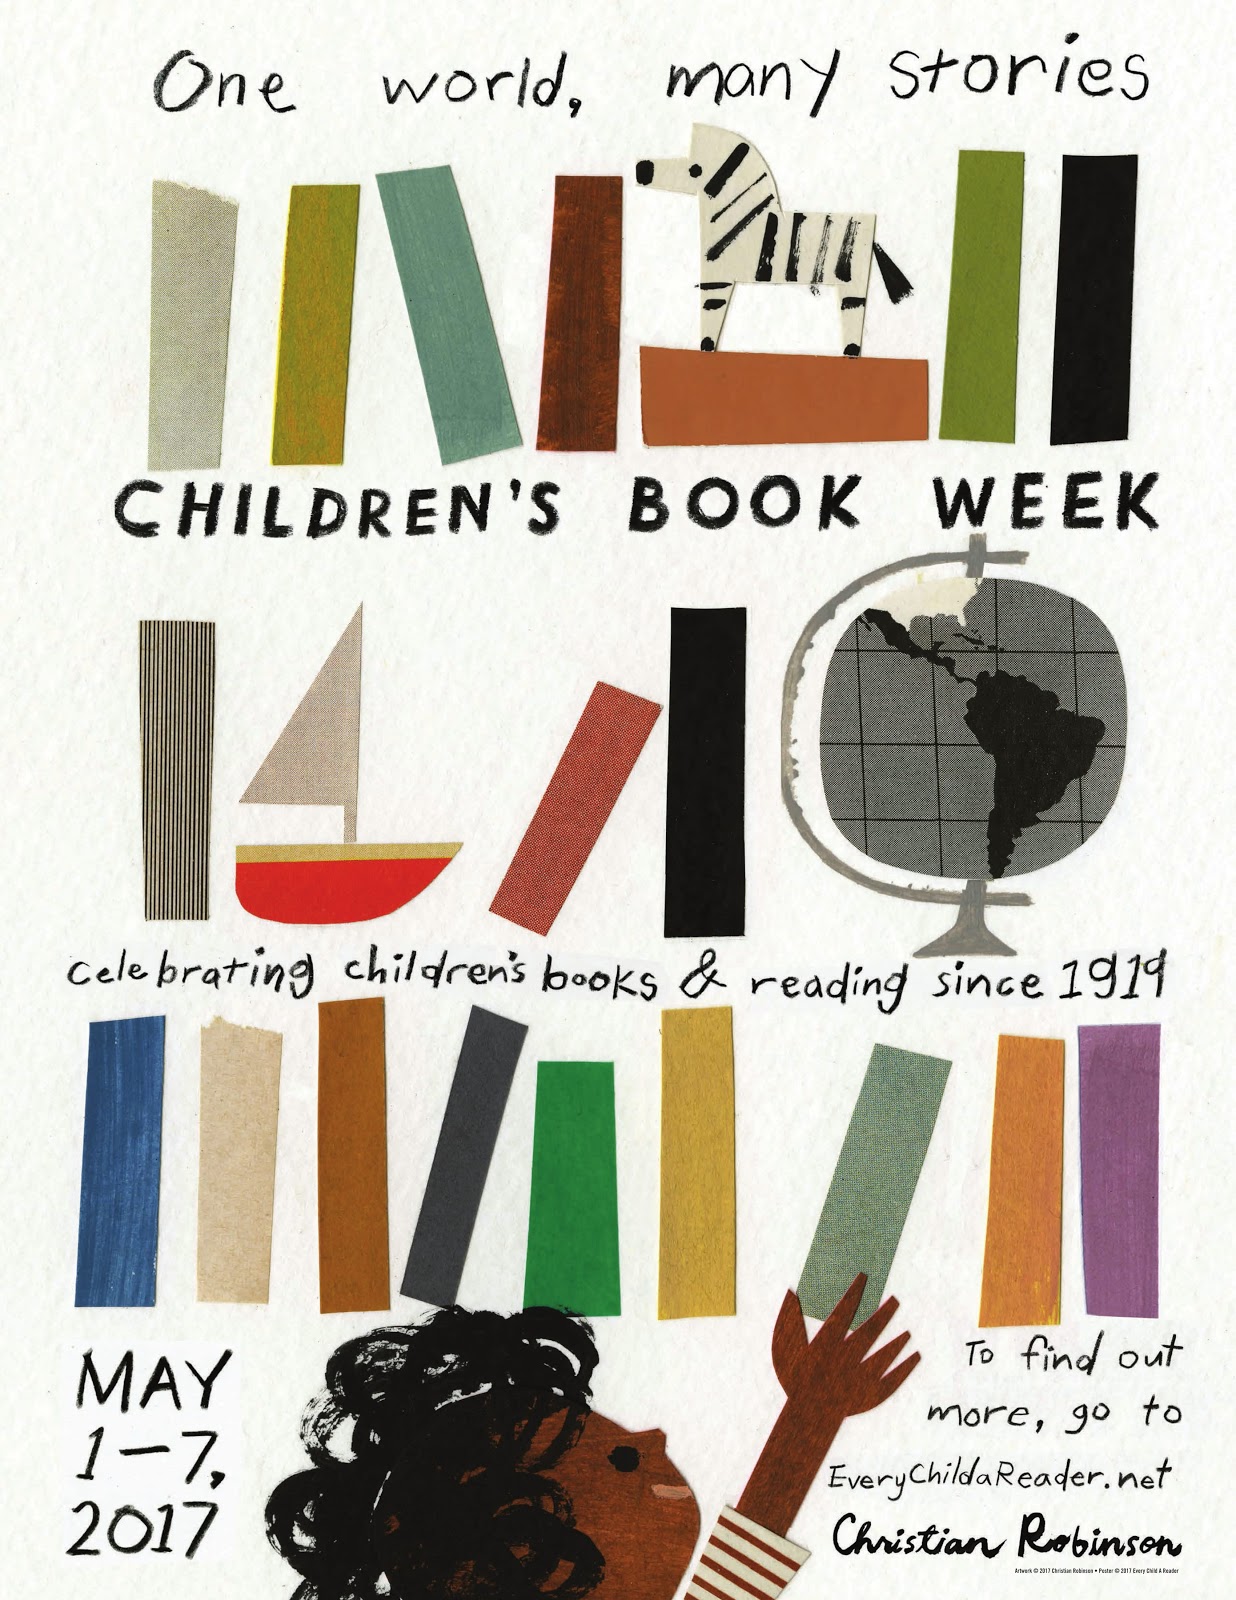 Looking Ahead to Children’s Book Week